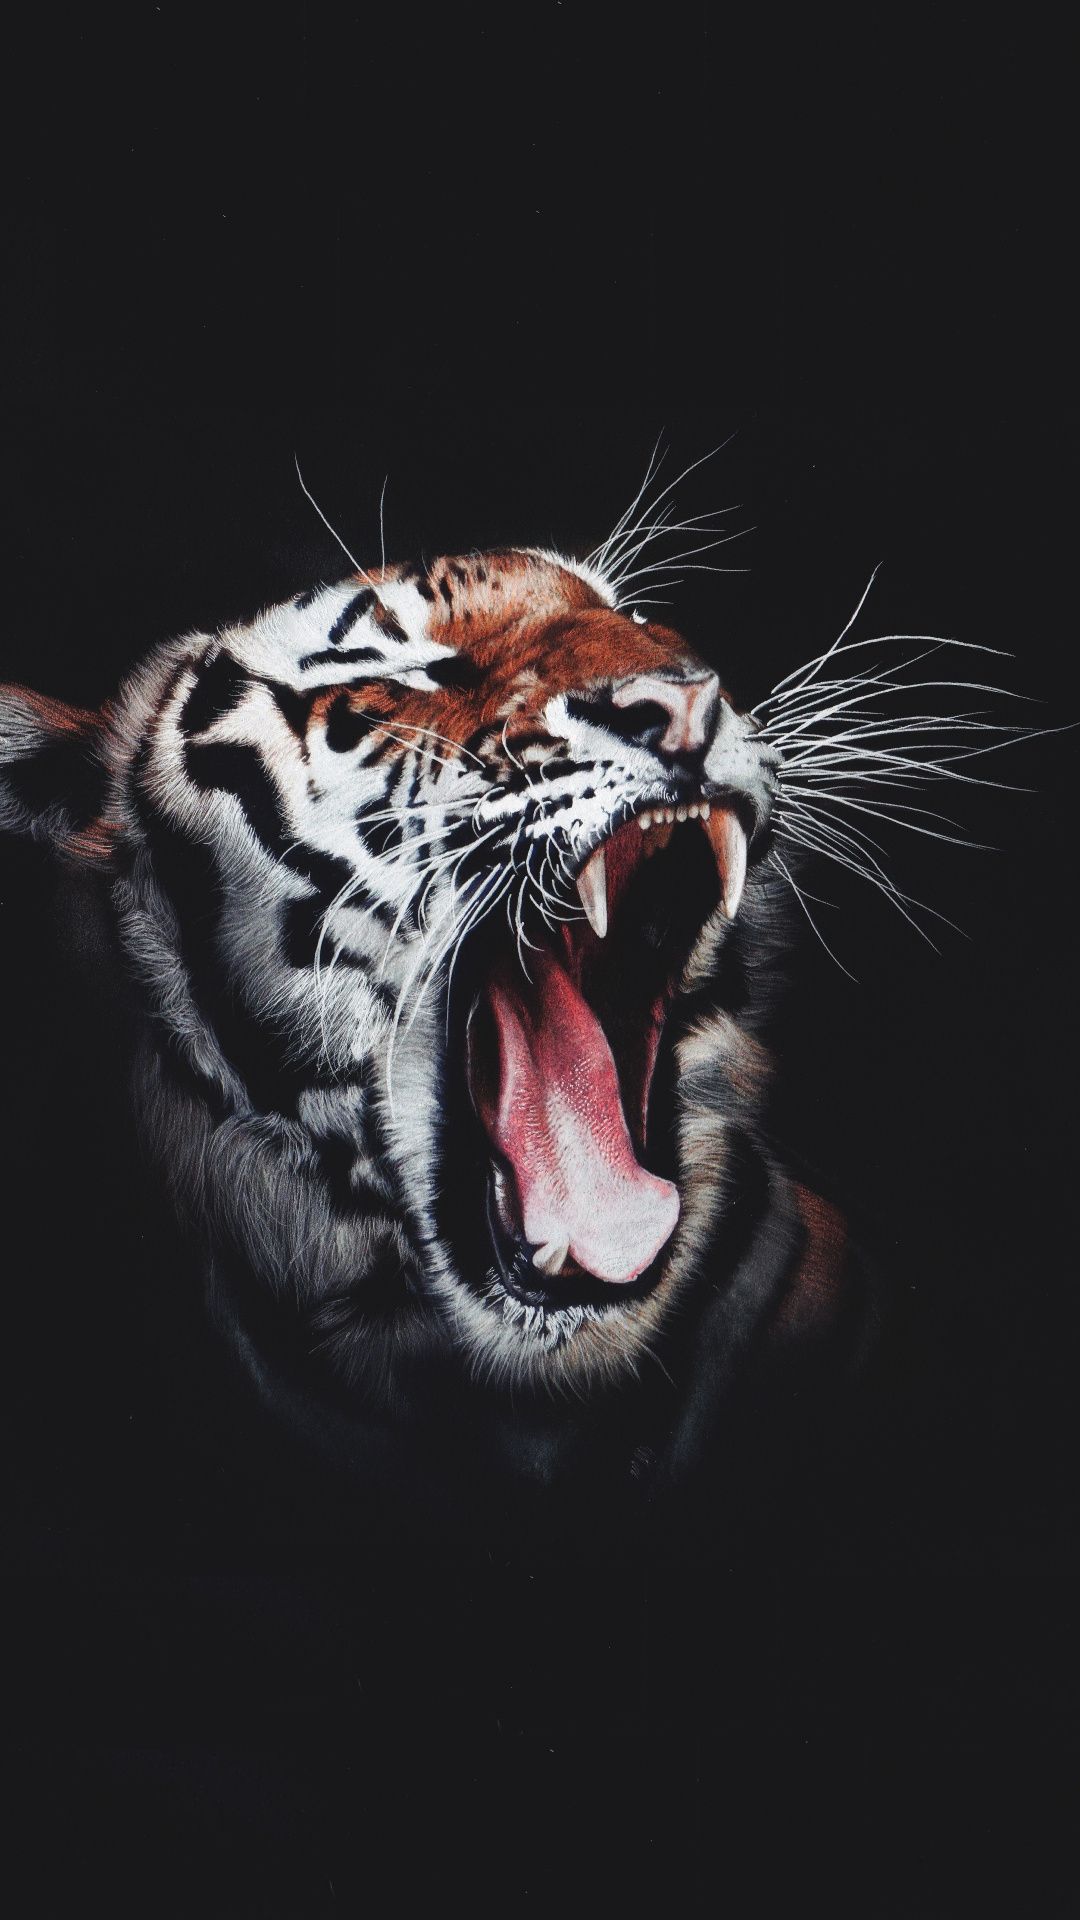 Tiger, wild animal, predator, muzzle, roar, dark, 1080x1920 wallpaper. Tiger image, Pets cats, Animals beautiful